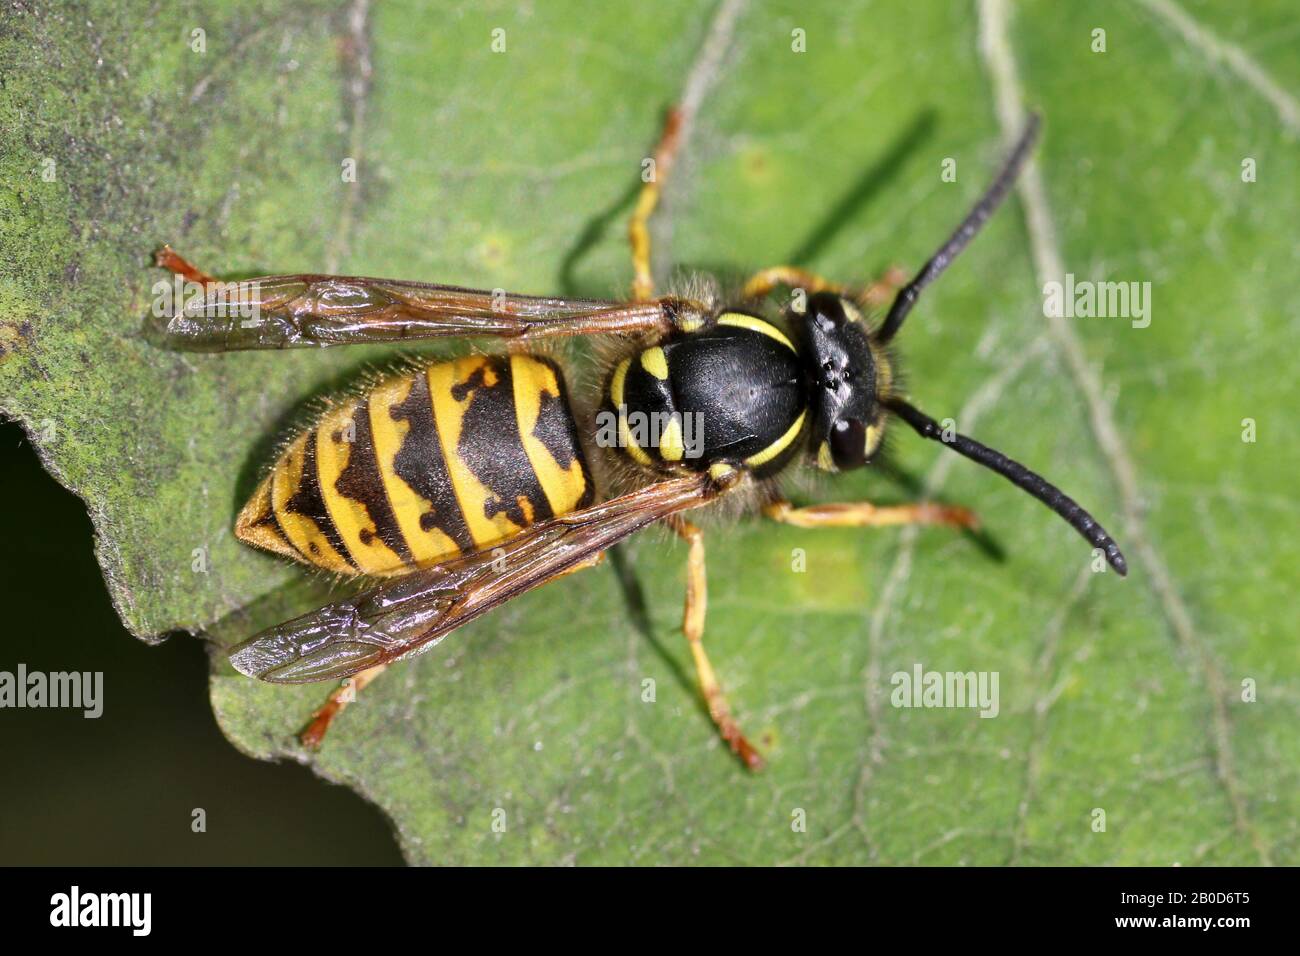 Common Wasp Vespula vulgaris a.k.a. Yellowjacket Stock Photo